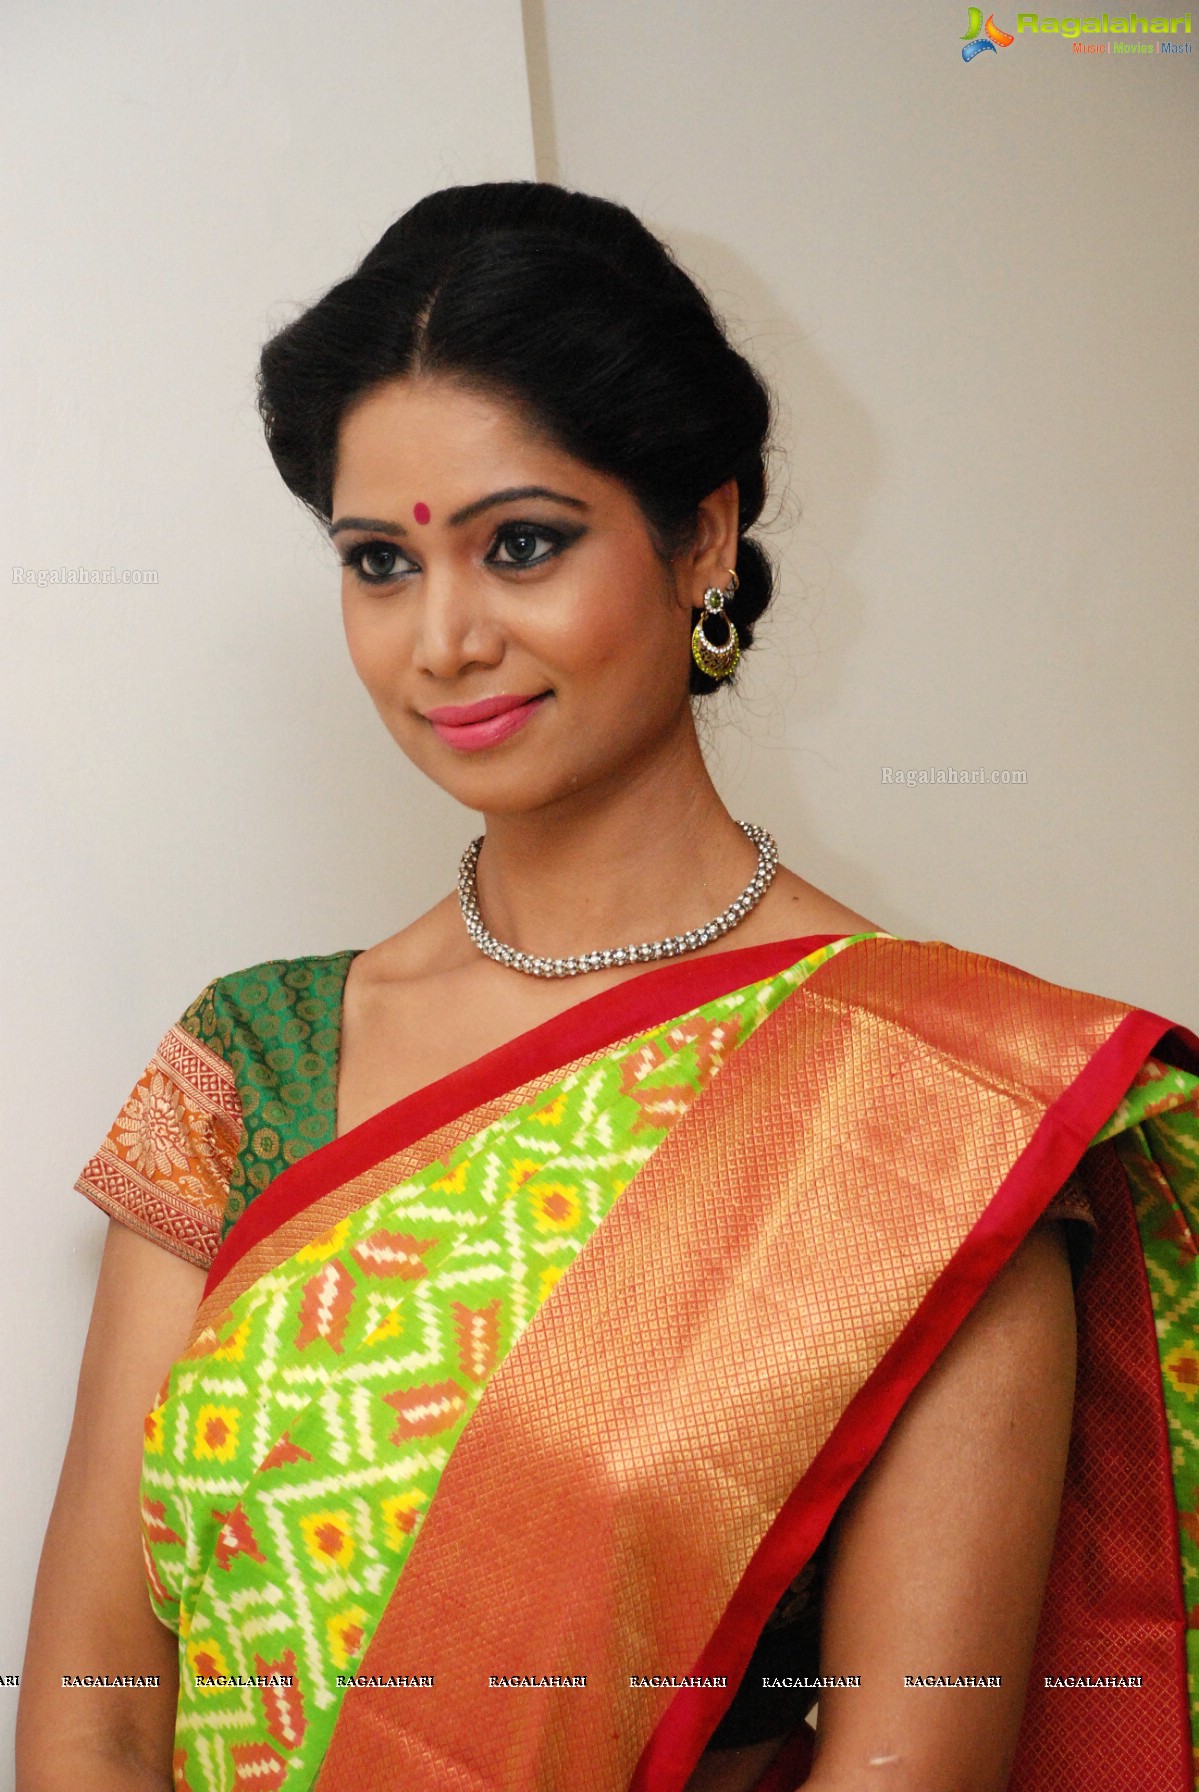 Mahekhanita Murthy